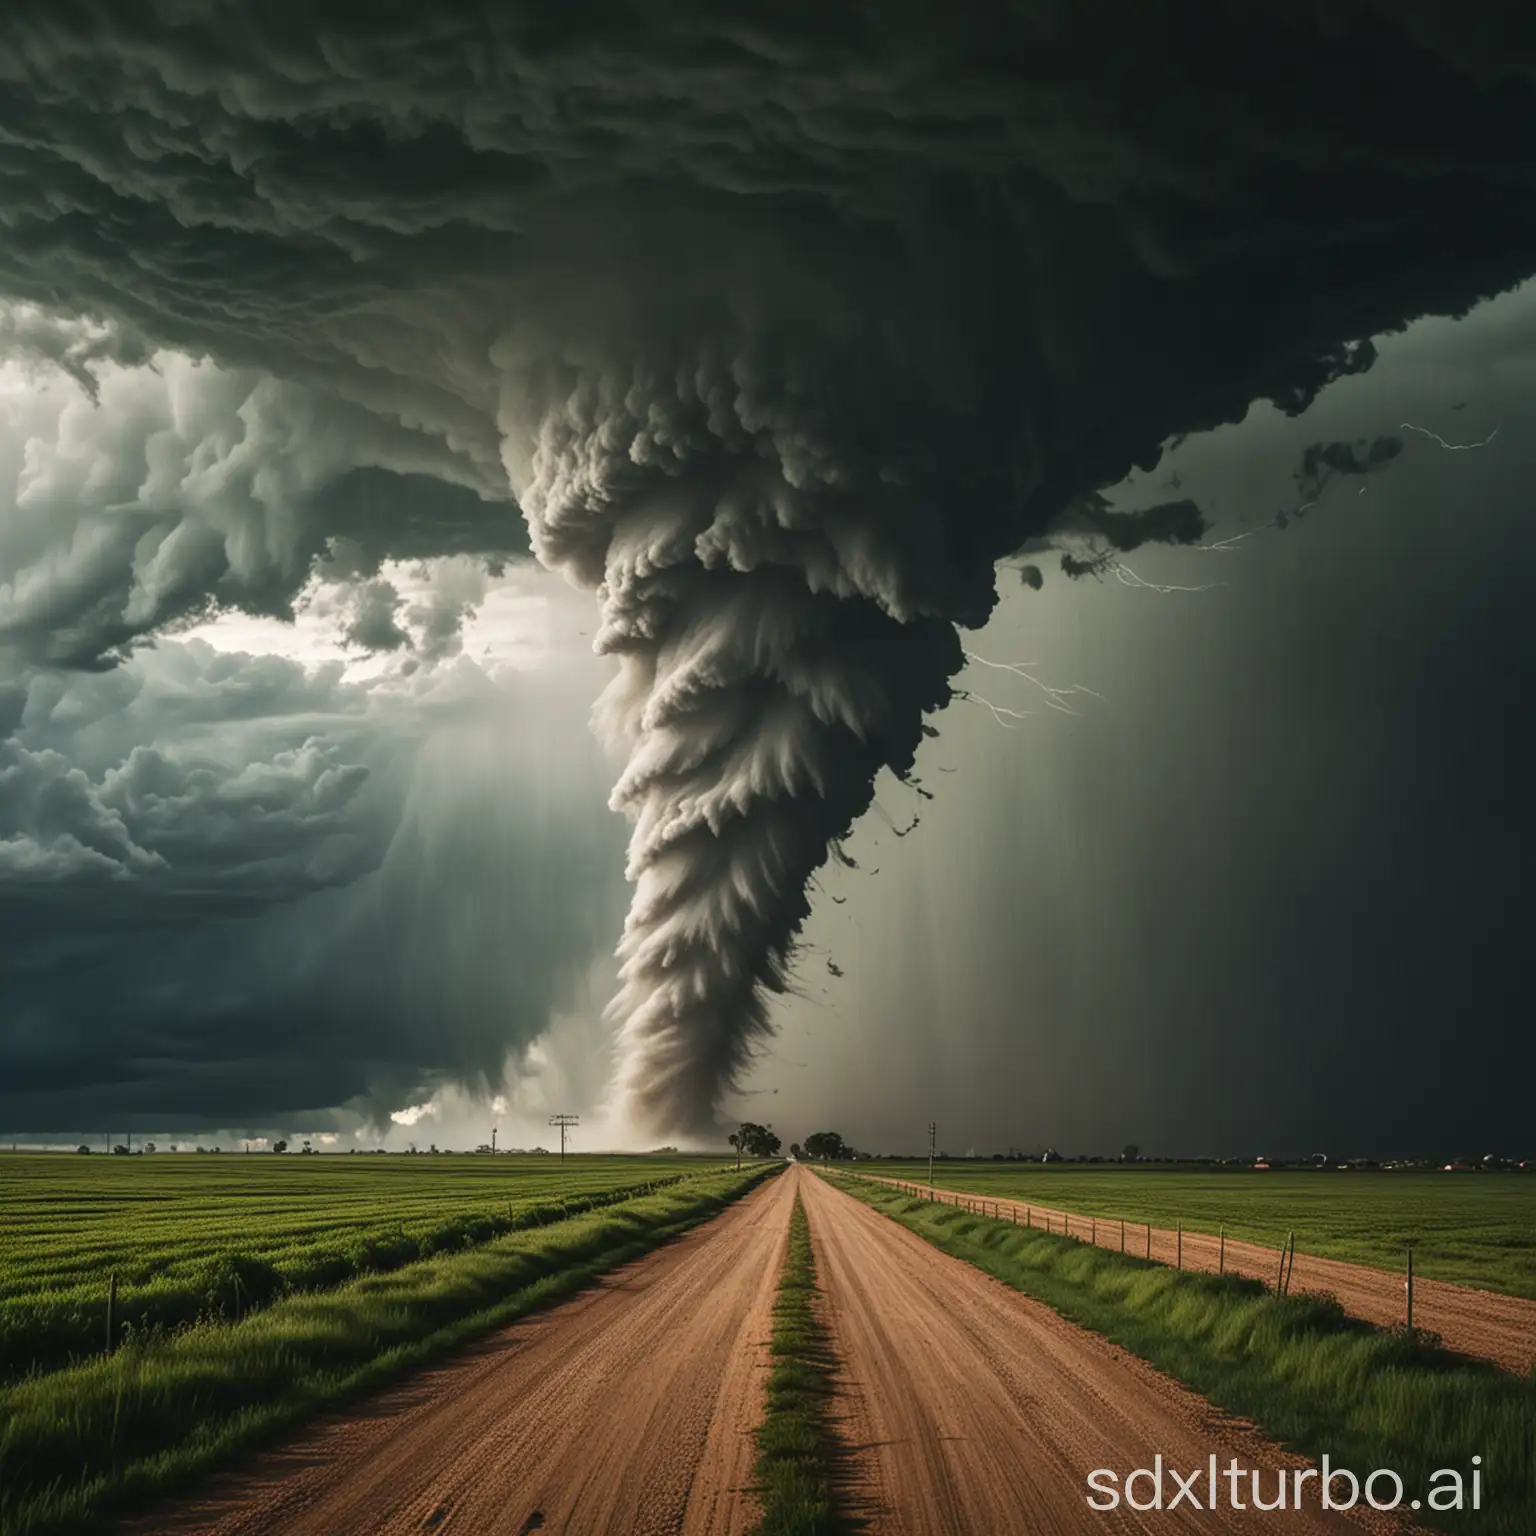 Dramatic shot of a powerful tornado tearing across a flat, rural landscape.